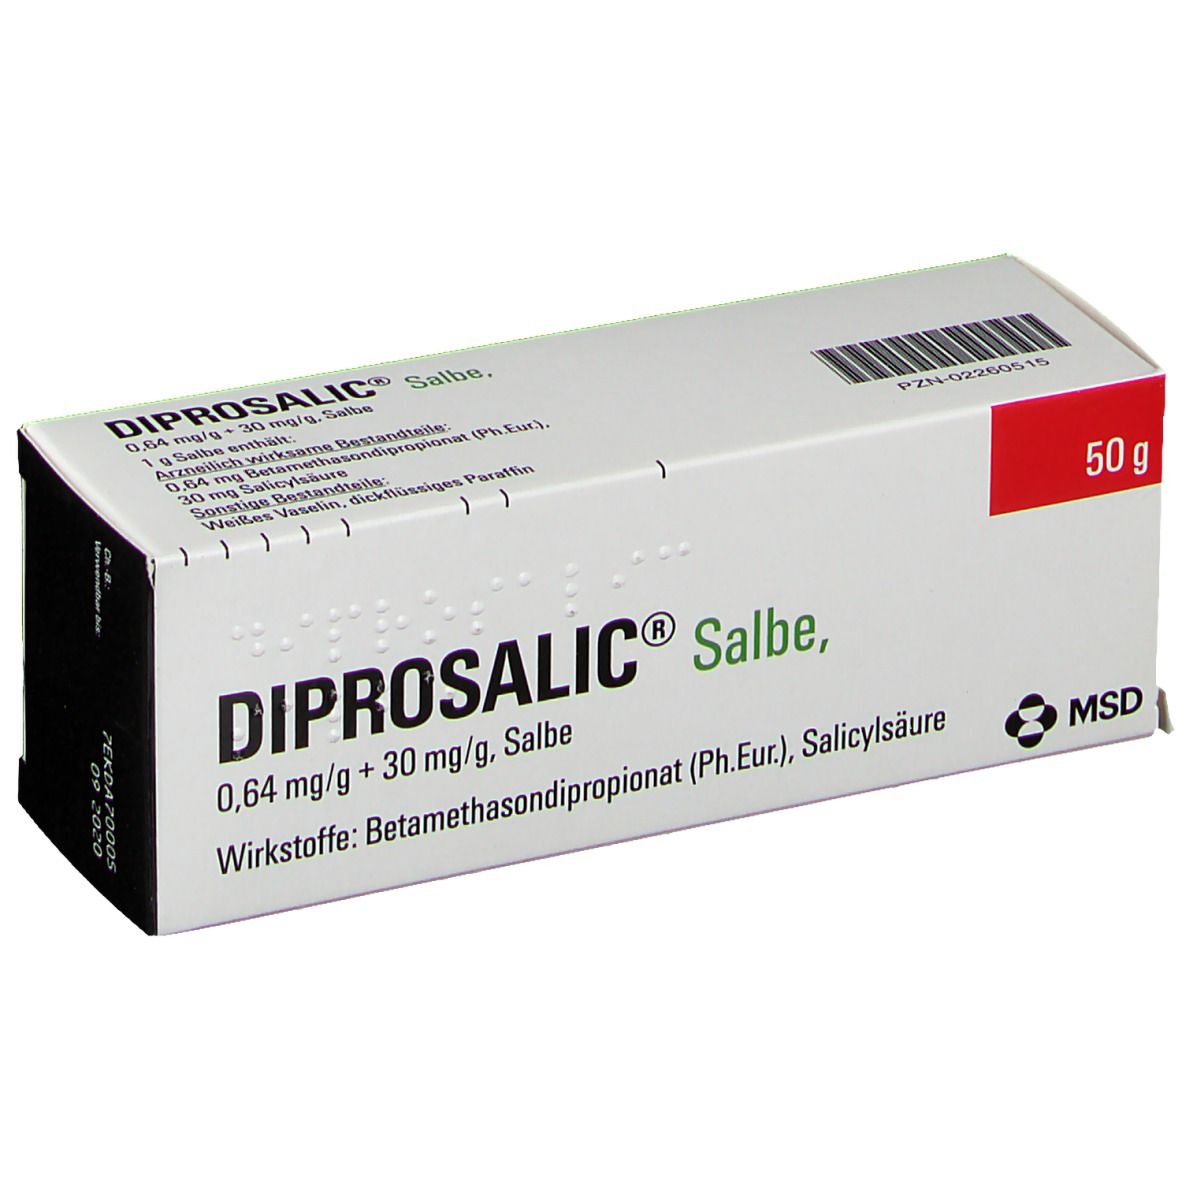 DIPROSALIC® Salbe 0,64 mg/g + 30 mg/g